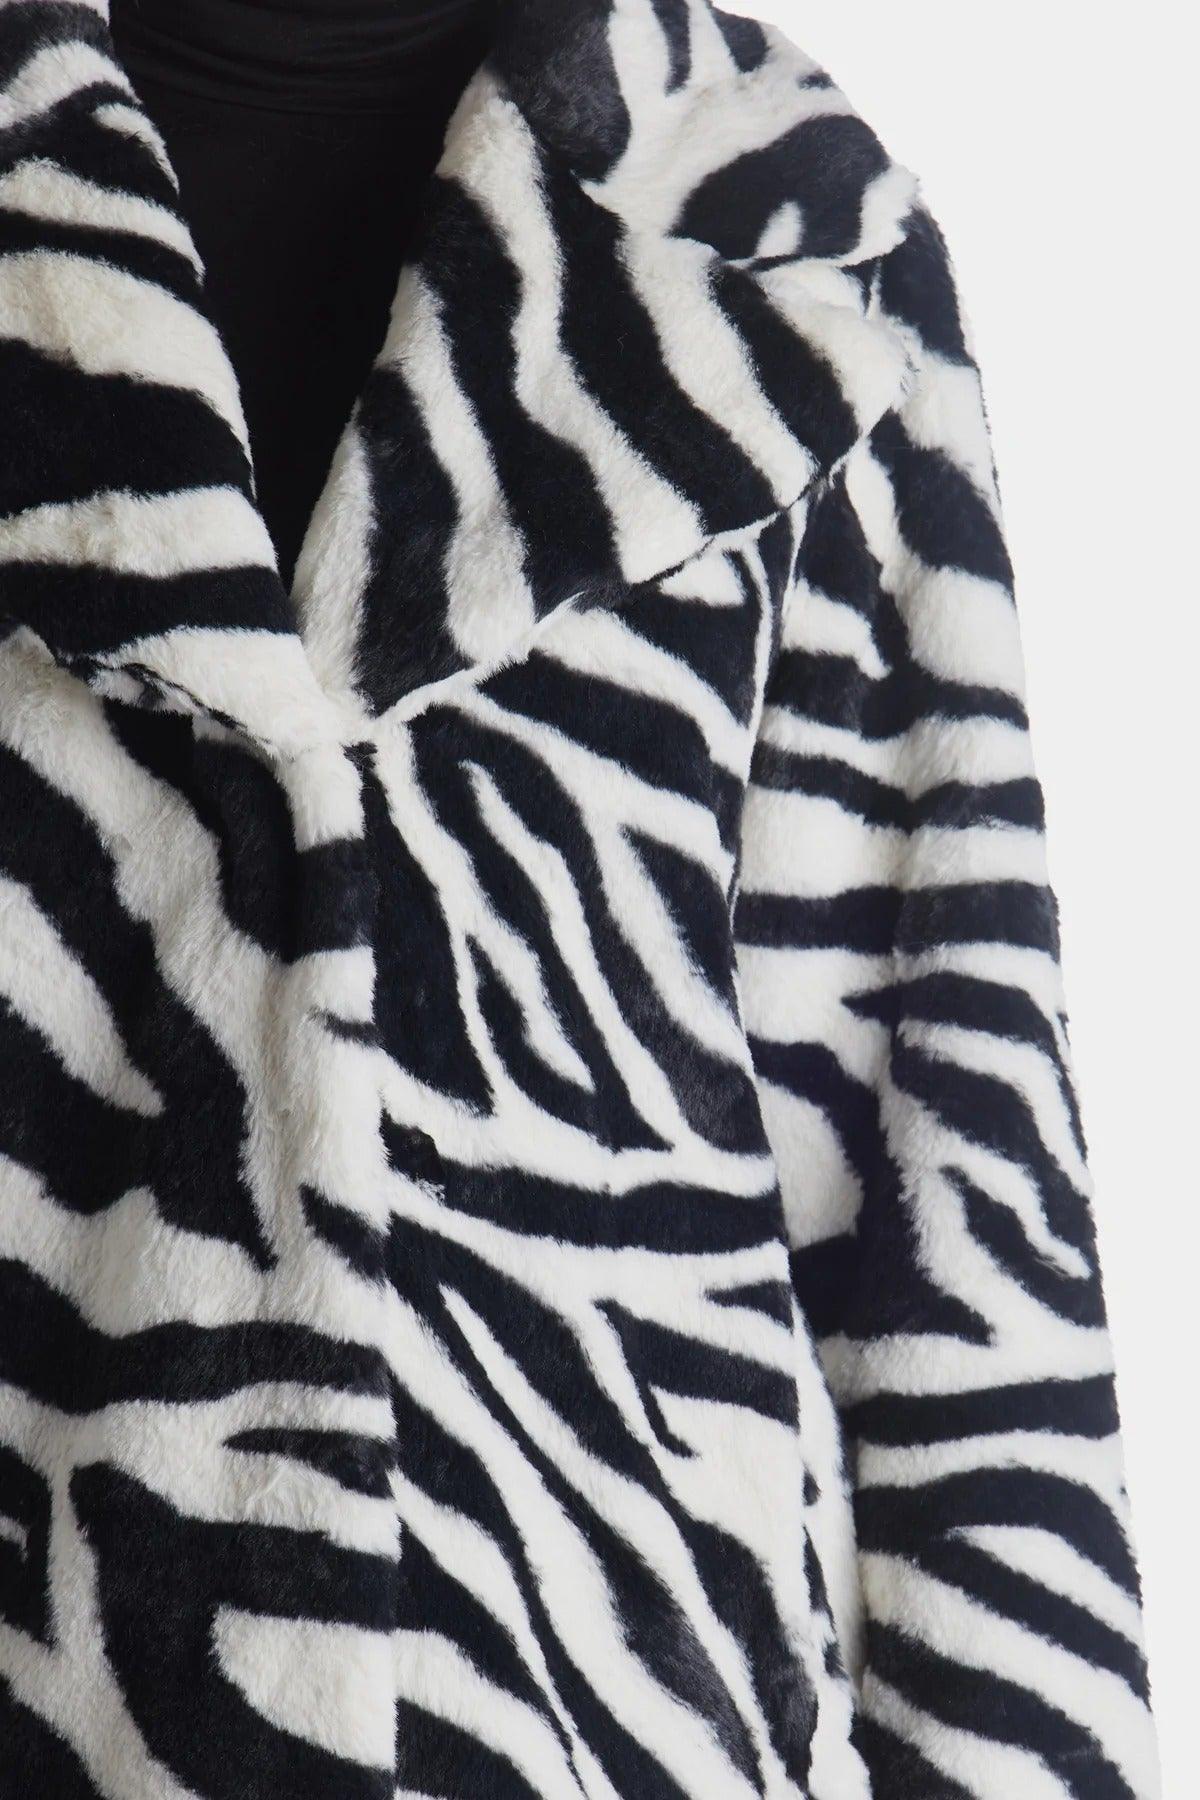 Kathy Ireland Women's Printed Zebra Faux Fur Coat Size L - SVNYFancy